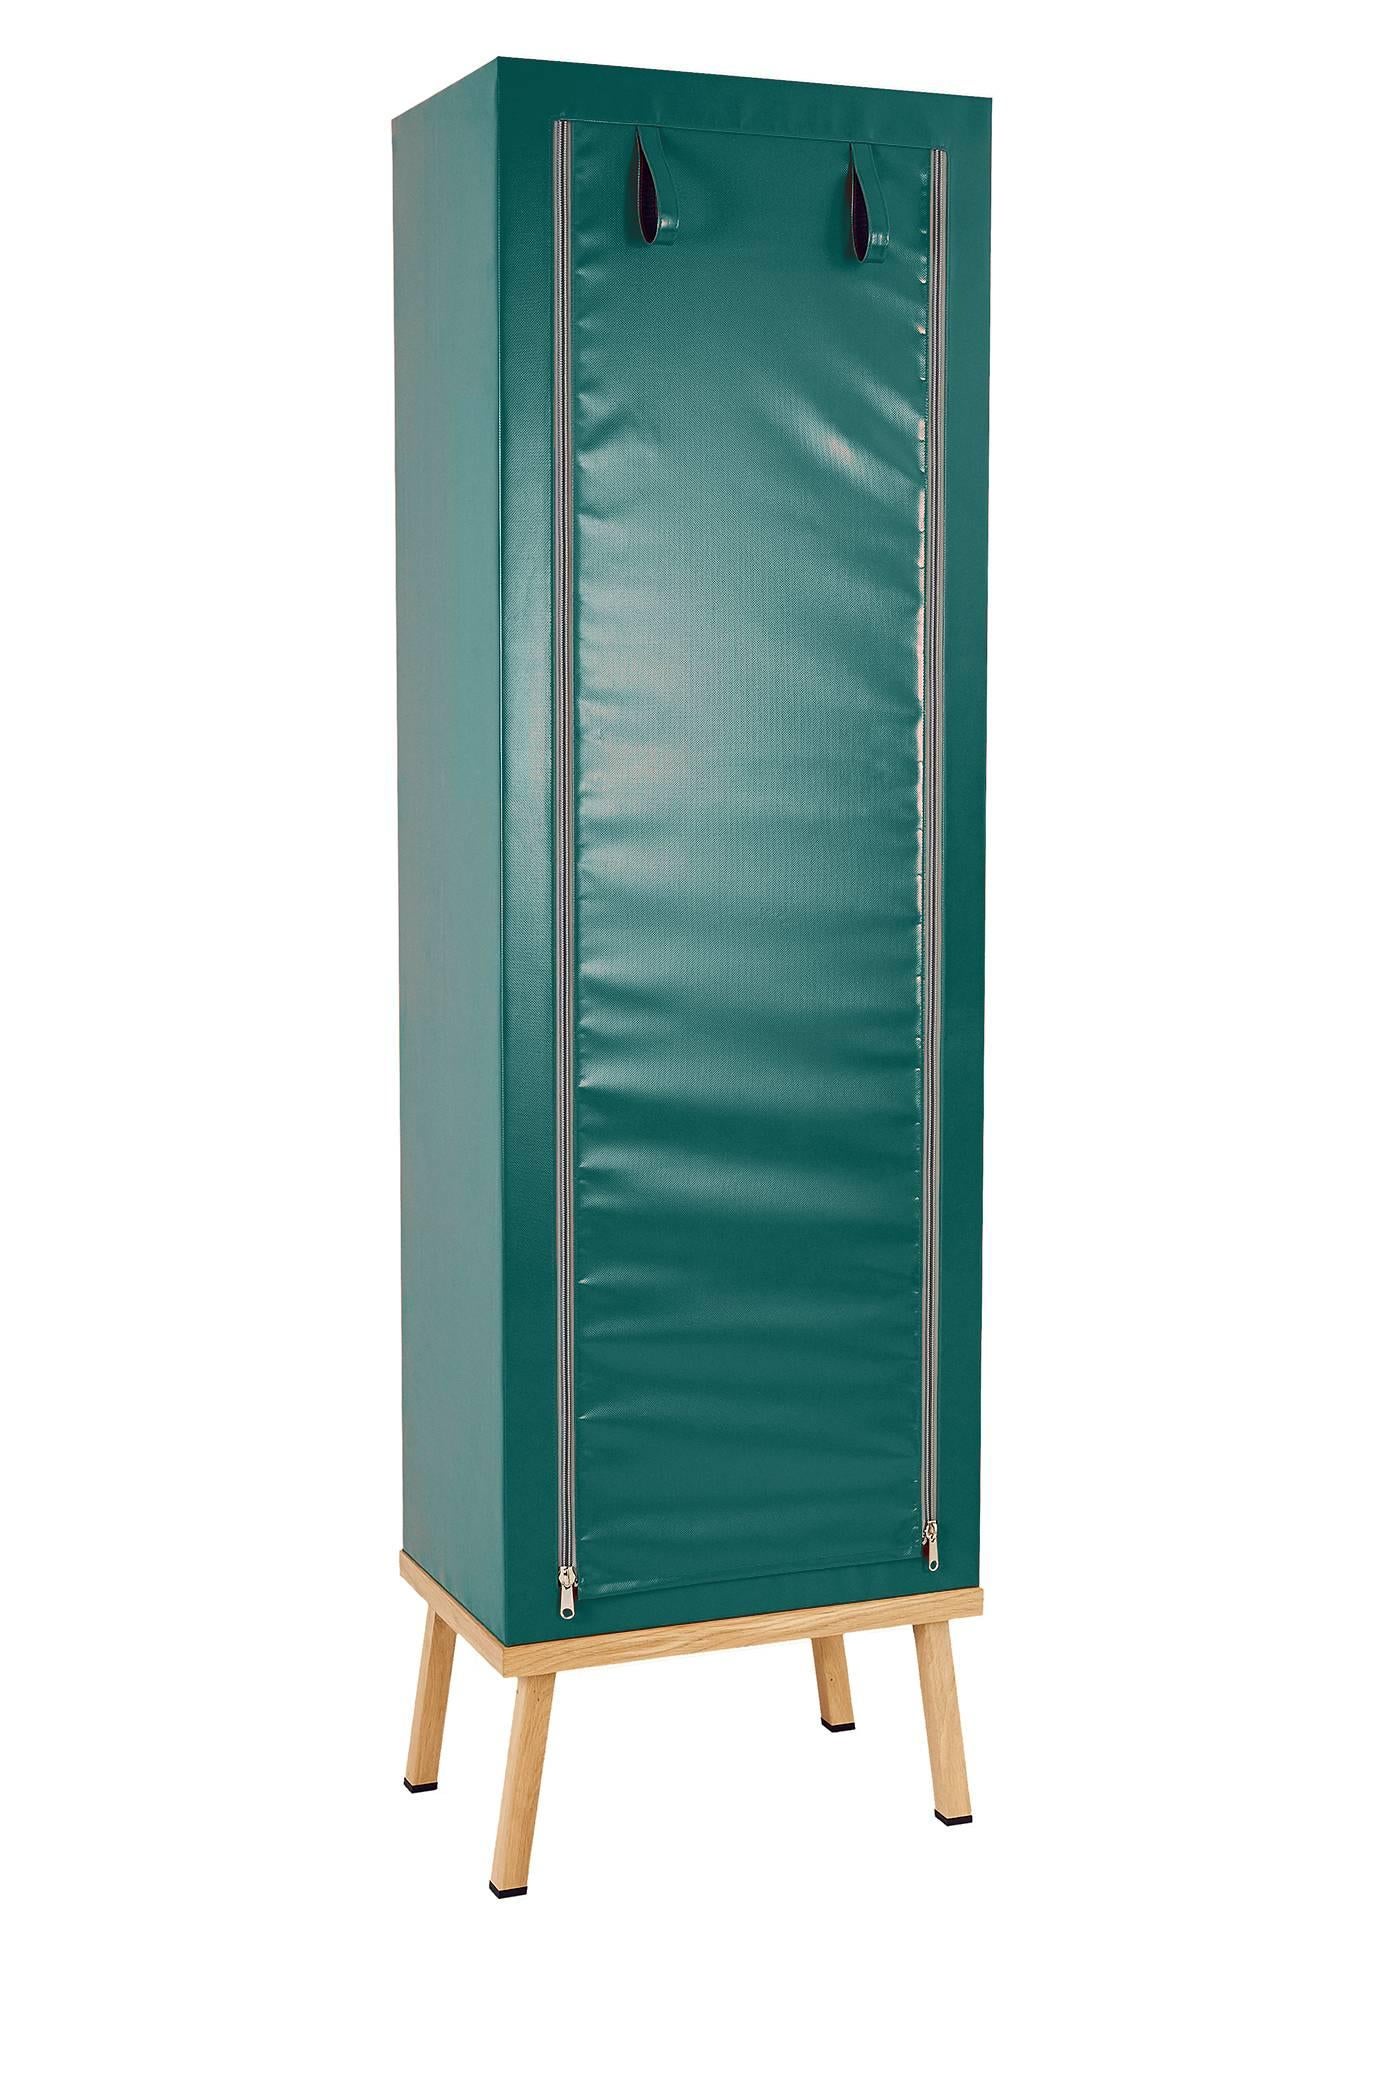 Visser and Meijwaard Truecolors cabinet in green PVC cloth with zipper opening

Designed by Visser en Meijwaard 
Contemporary, Netherlands, 2015
PVC cloth, oakwood, rubber
Measures: H 78.75 in, W 23.75 in, D 15.75 in 

Lead time 8-10 weeks.